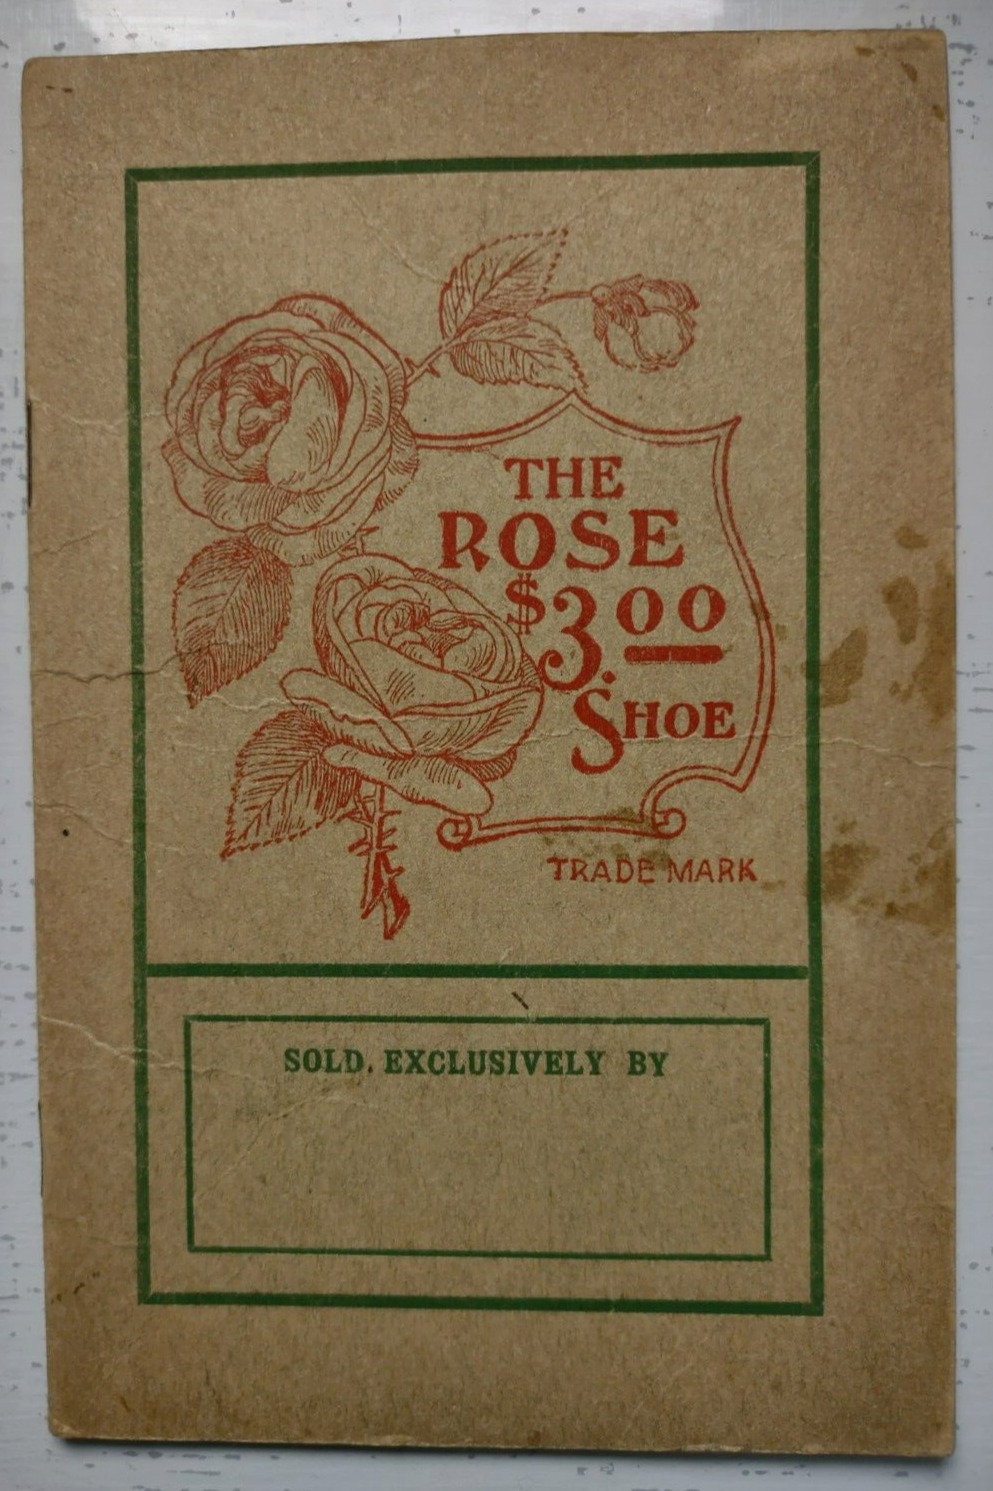 Siebert Whitman & Co Rochester NY Vintage Rose Shoe Illustrated Catalog